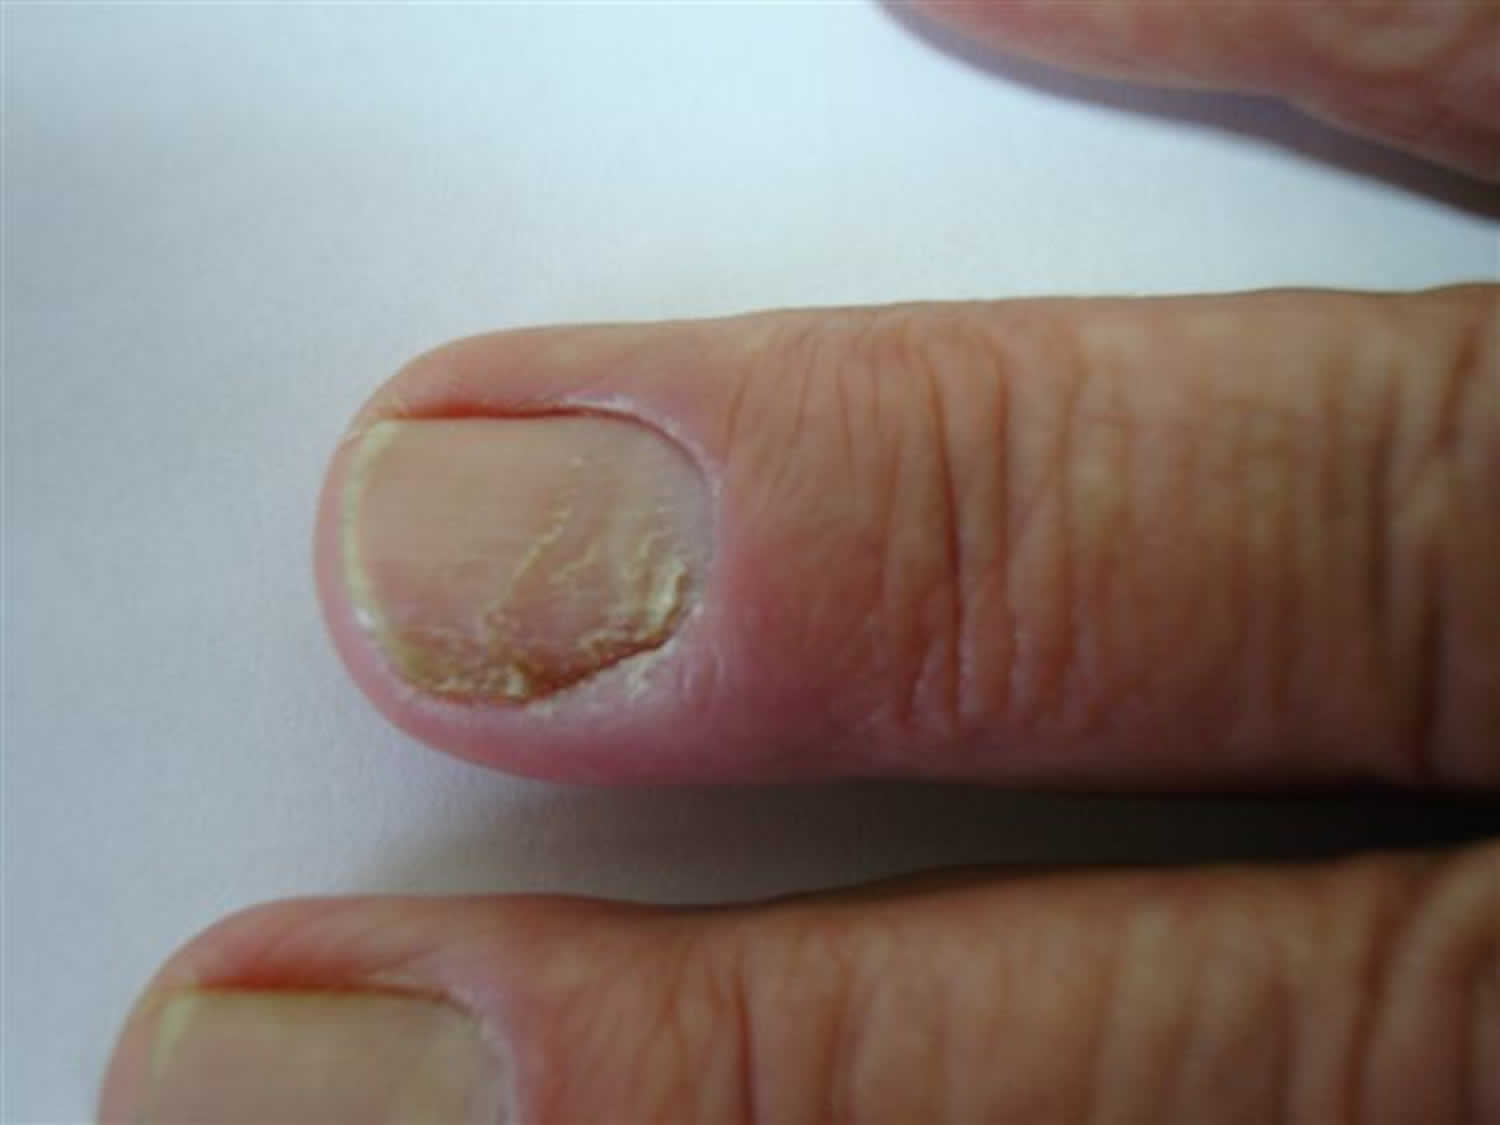 7 Reasons Why Fingernail Hurts When Pressed | Blossom Nail Spa